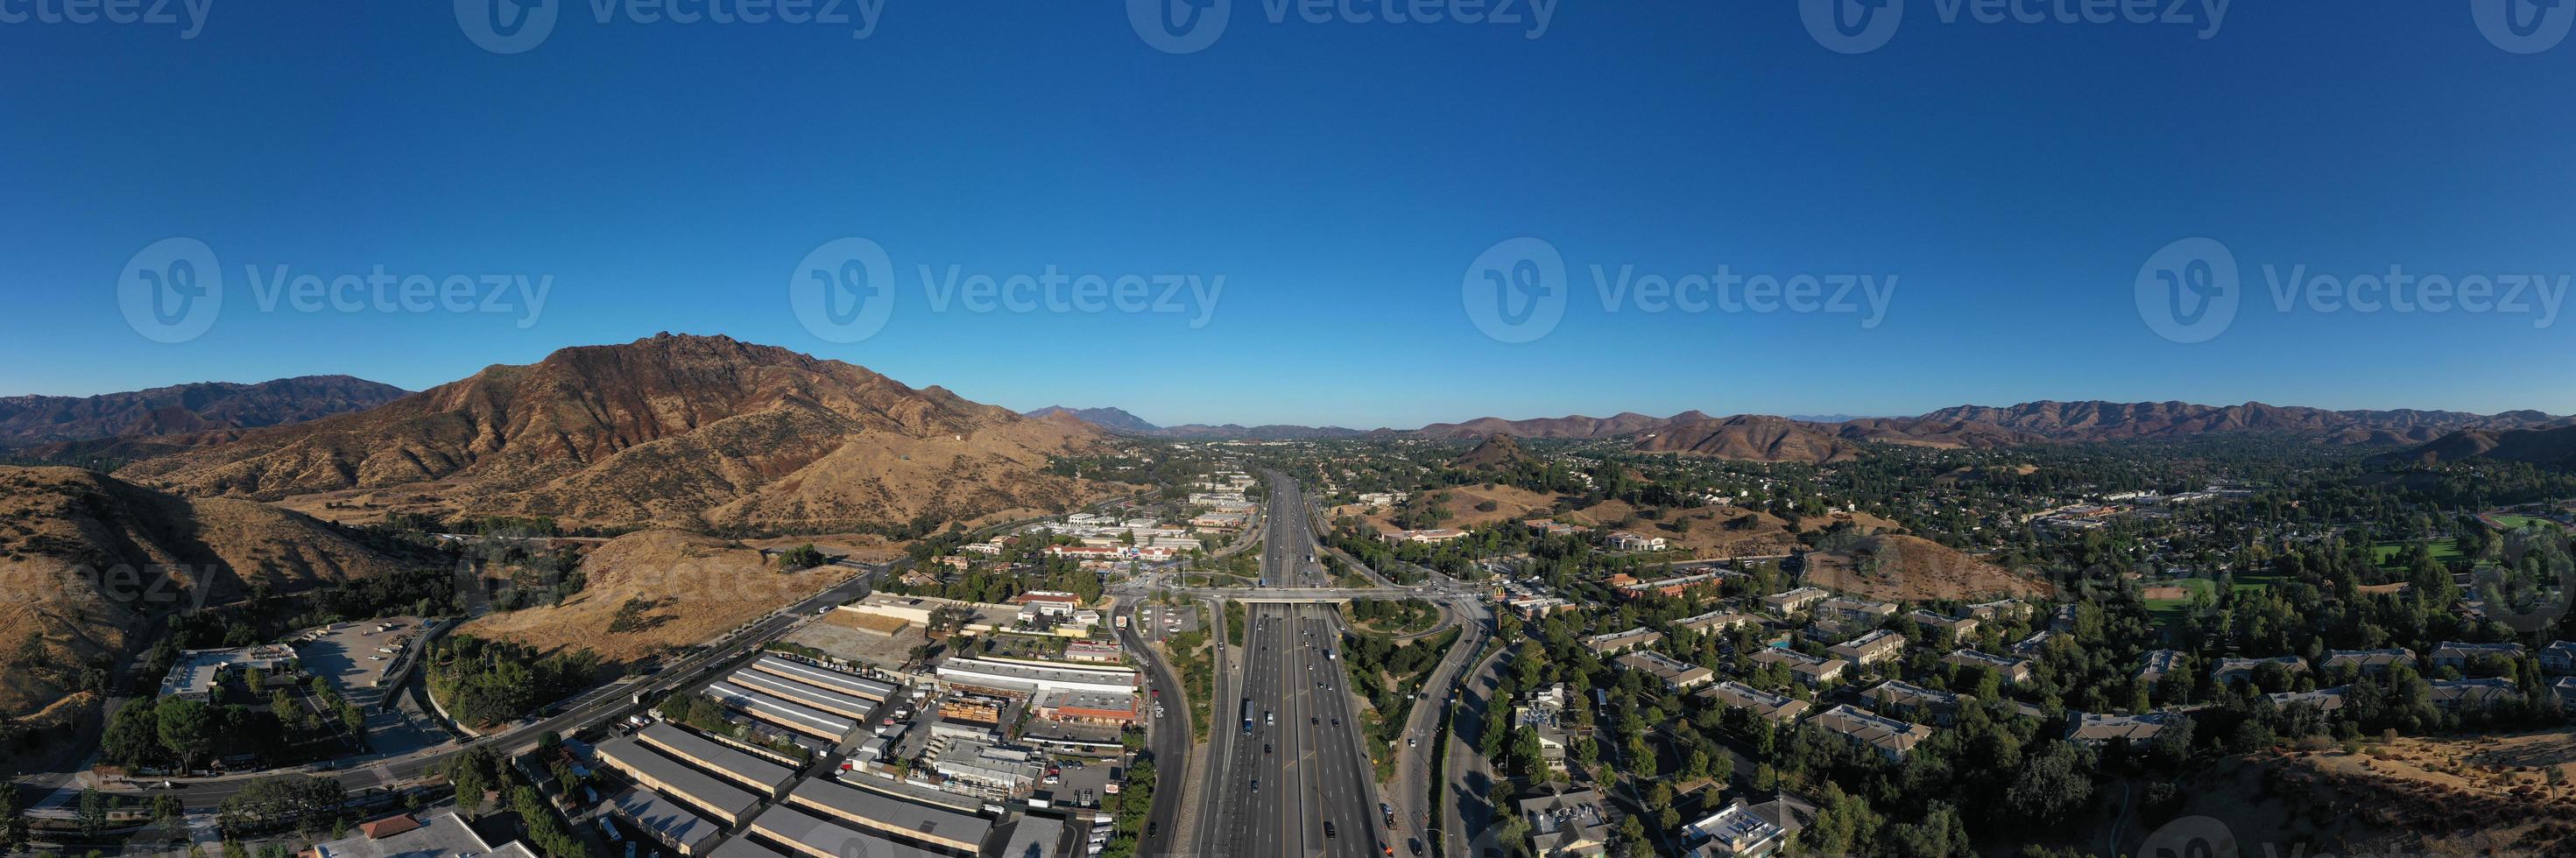 agoura heuvels, ca - aug 26, 2020 - antenne visie langs agoura heuvels en de ventura snelweg in los angeles district, Californië. foto